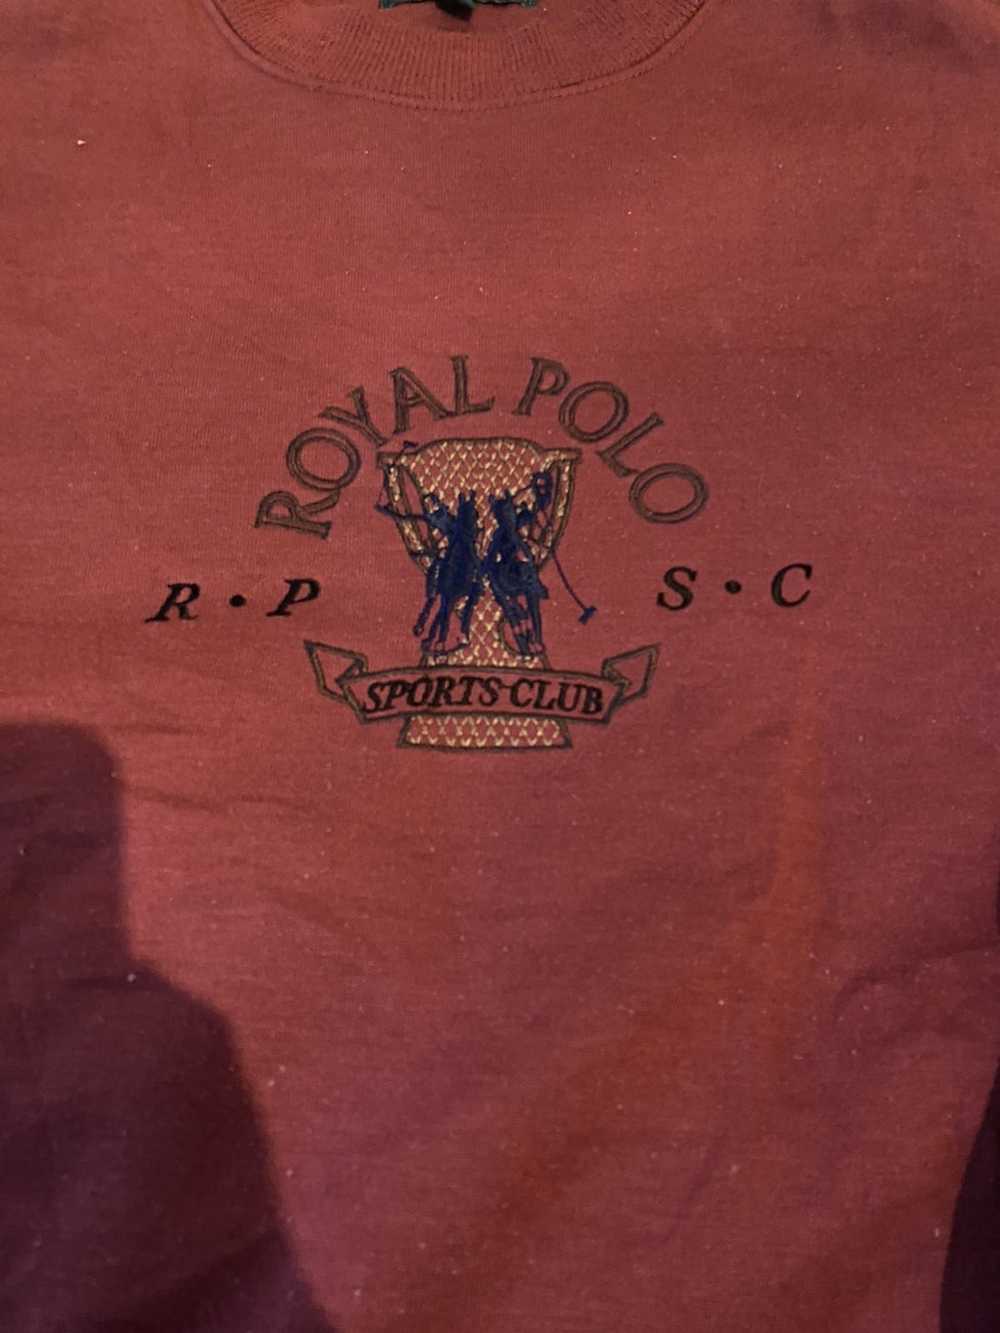 Polo Ralph Lauren Vintage Royal Polo Sports club - image 3